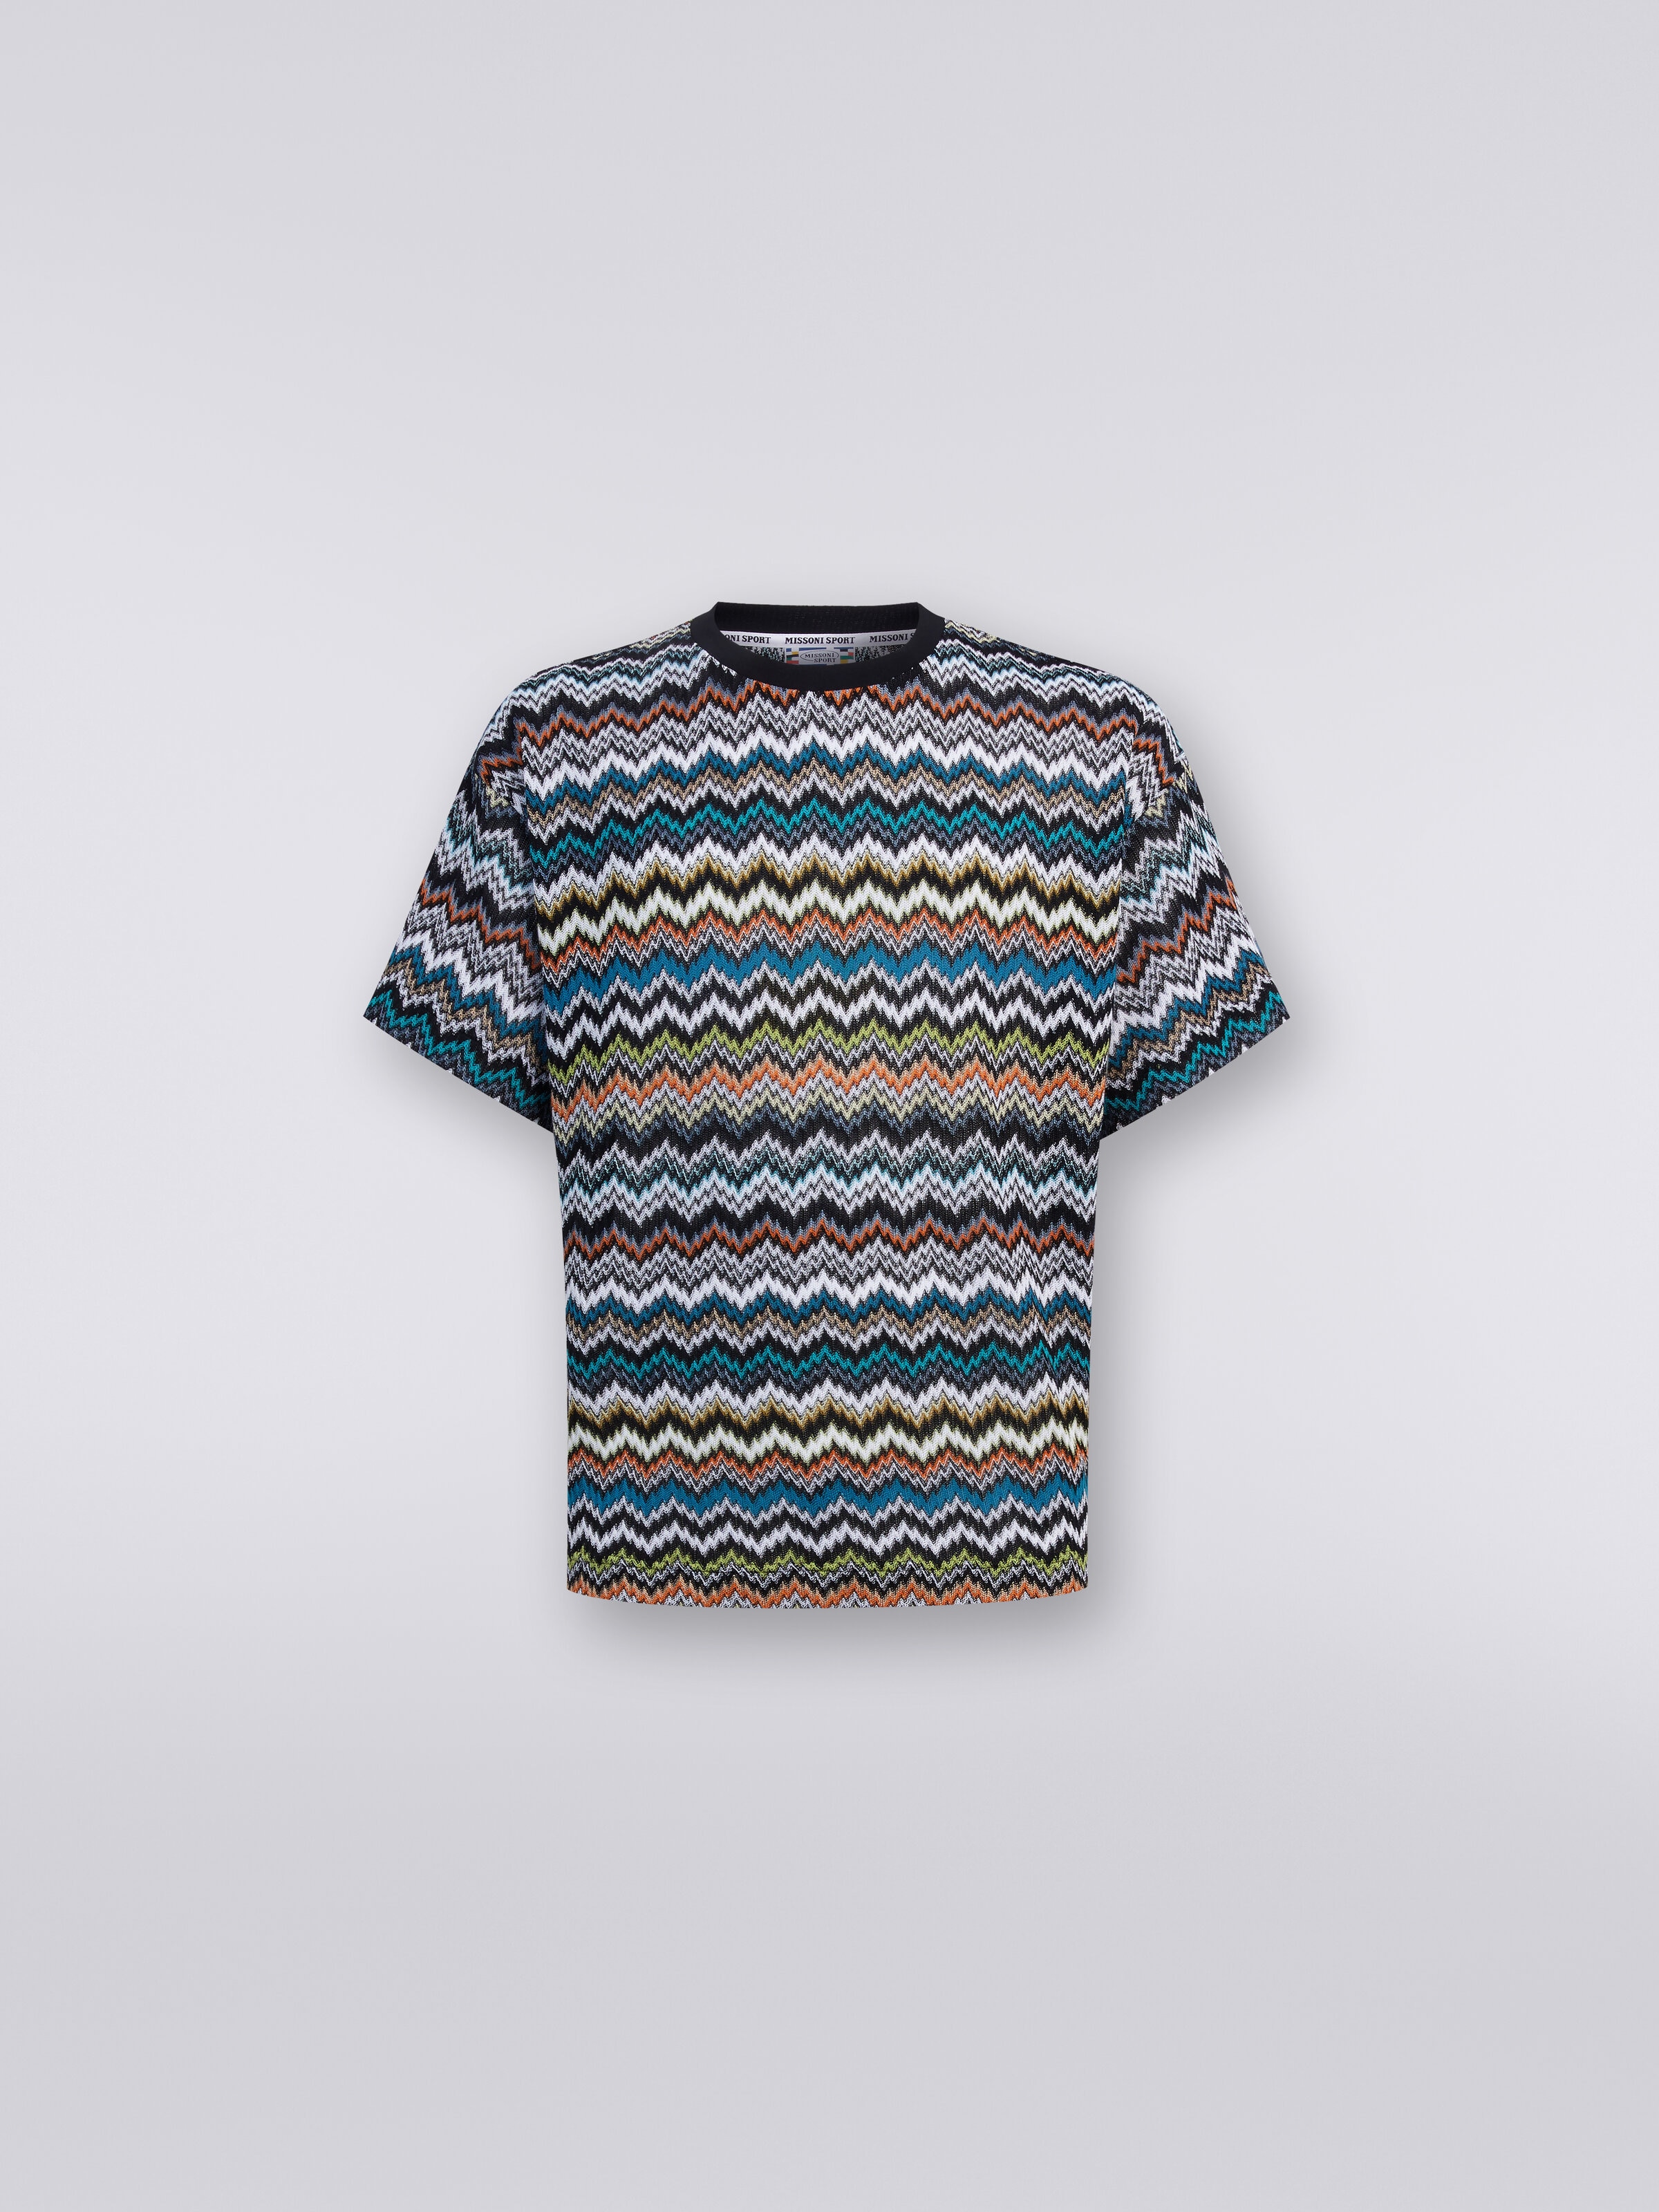 Crew-neck T-shirt in zigzag cotton knit, Multicoloured  - 0